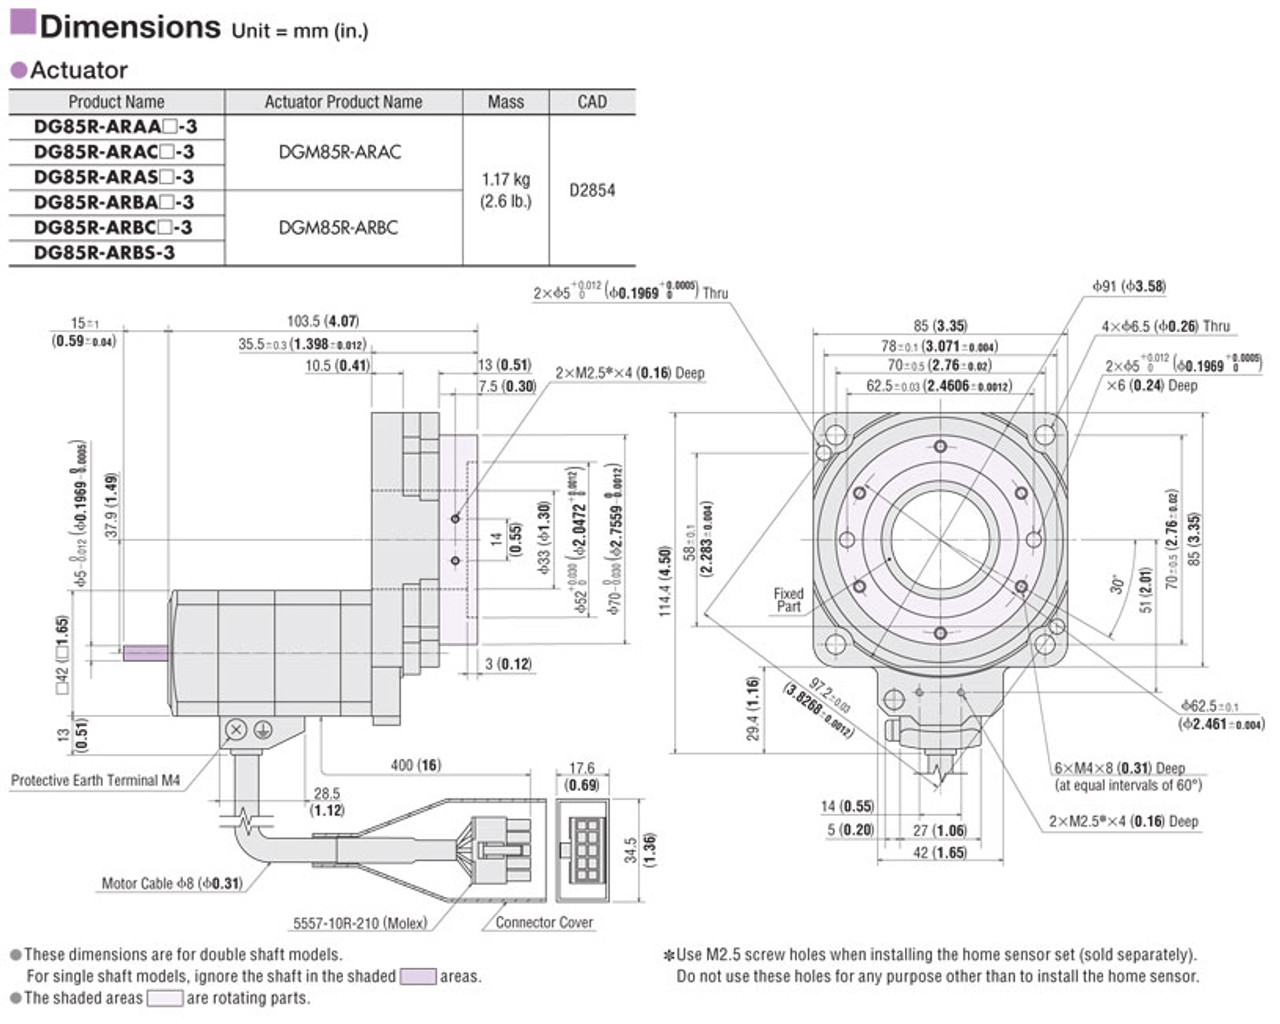 DGM85R-ARBC / ARD-C - Dimensions